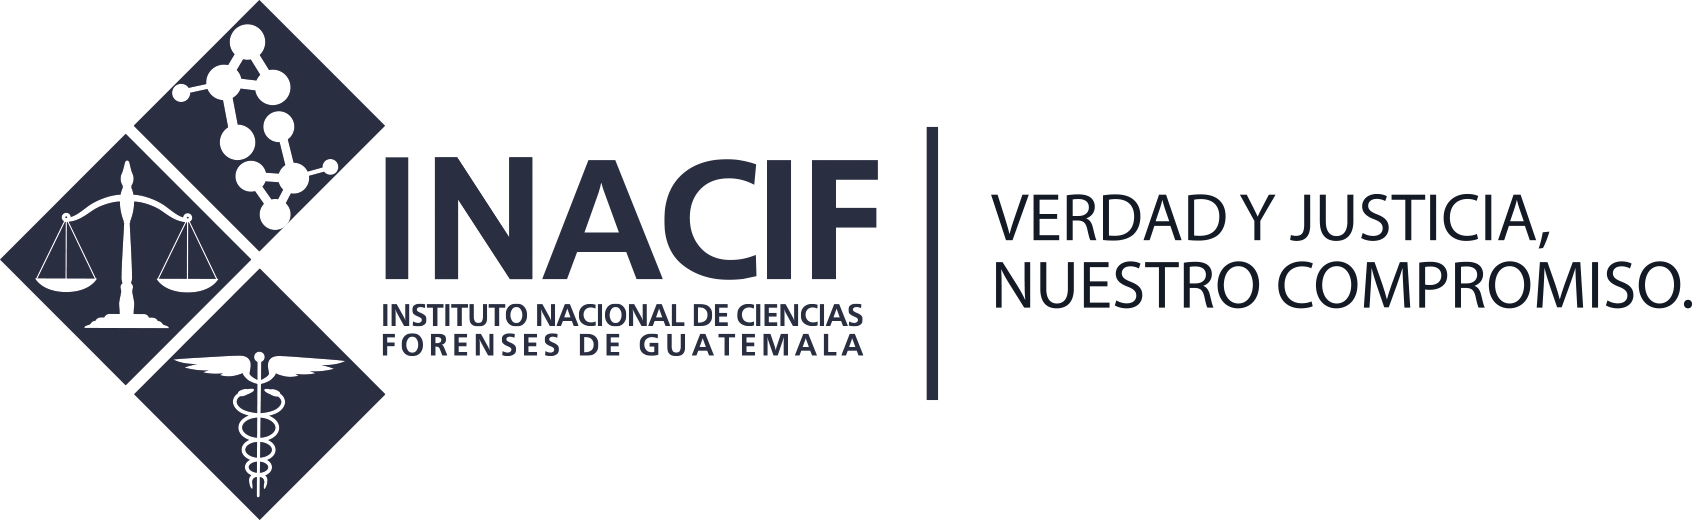 Instituto Nacional de Ciencias Forenses de Guatemala